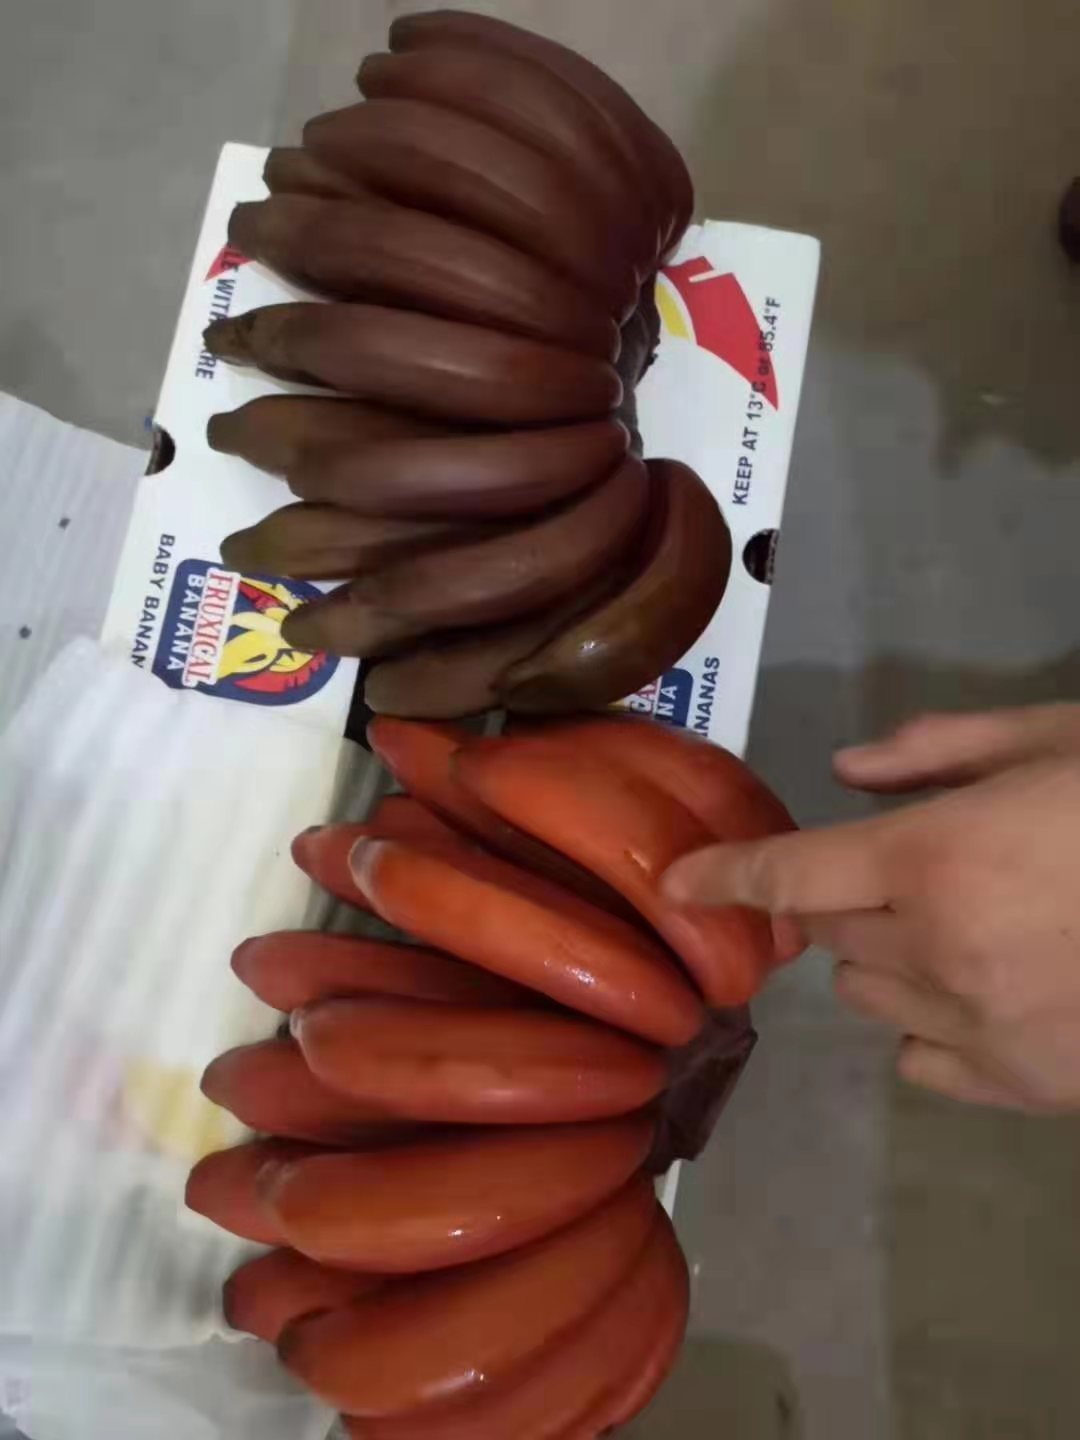 South American Red banana